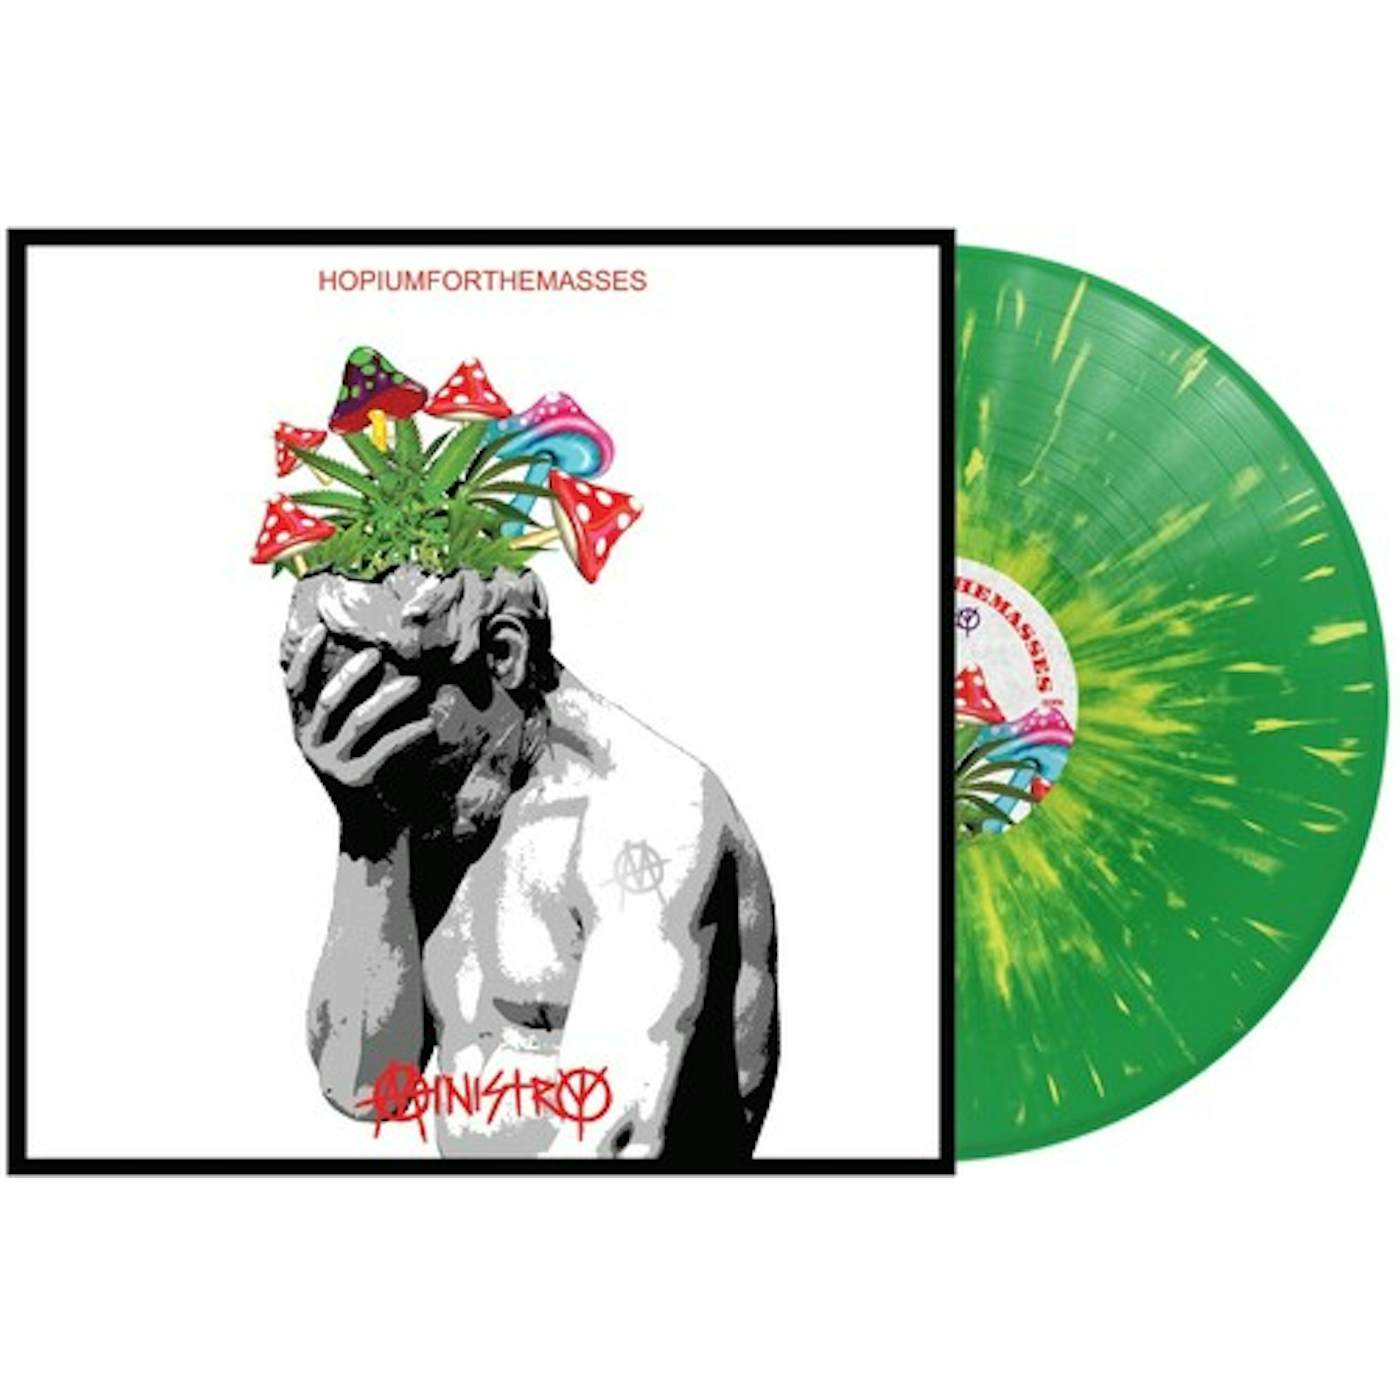 Ministry HOPIUMFORTHEMASSES - GREEN & YELLOW SPLATTER Vinyl Record - Green Vinyl